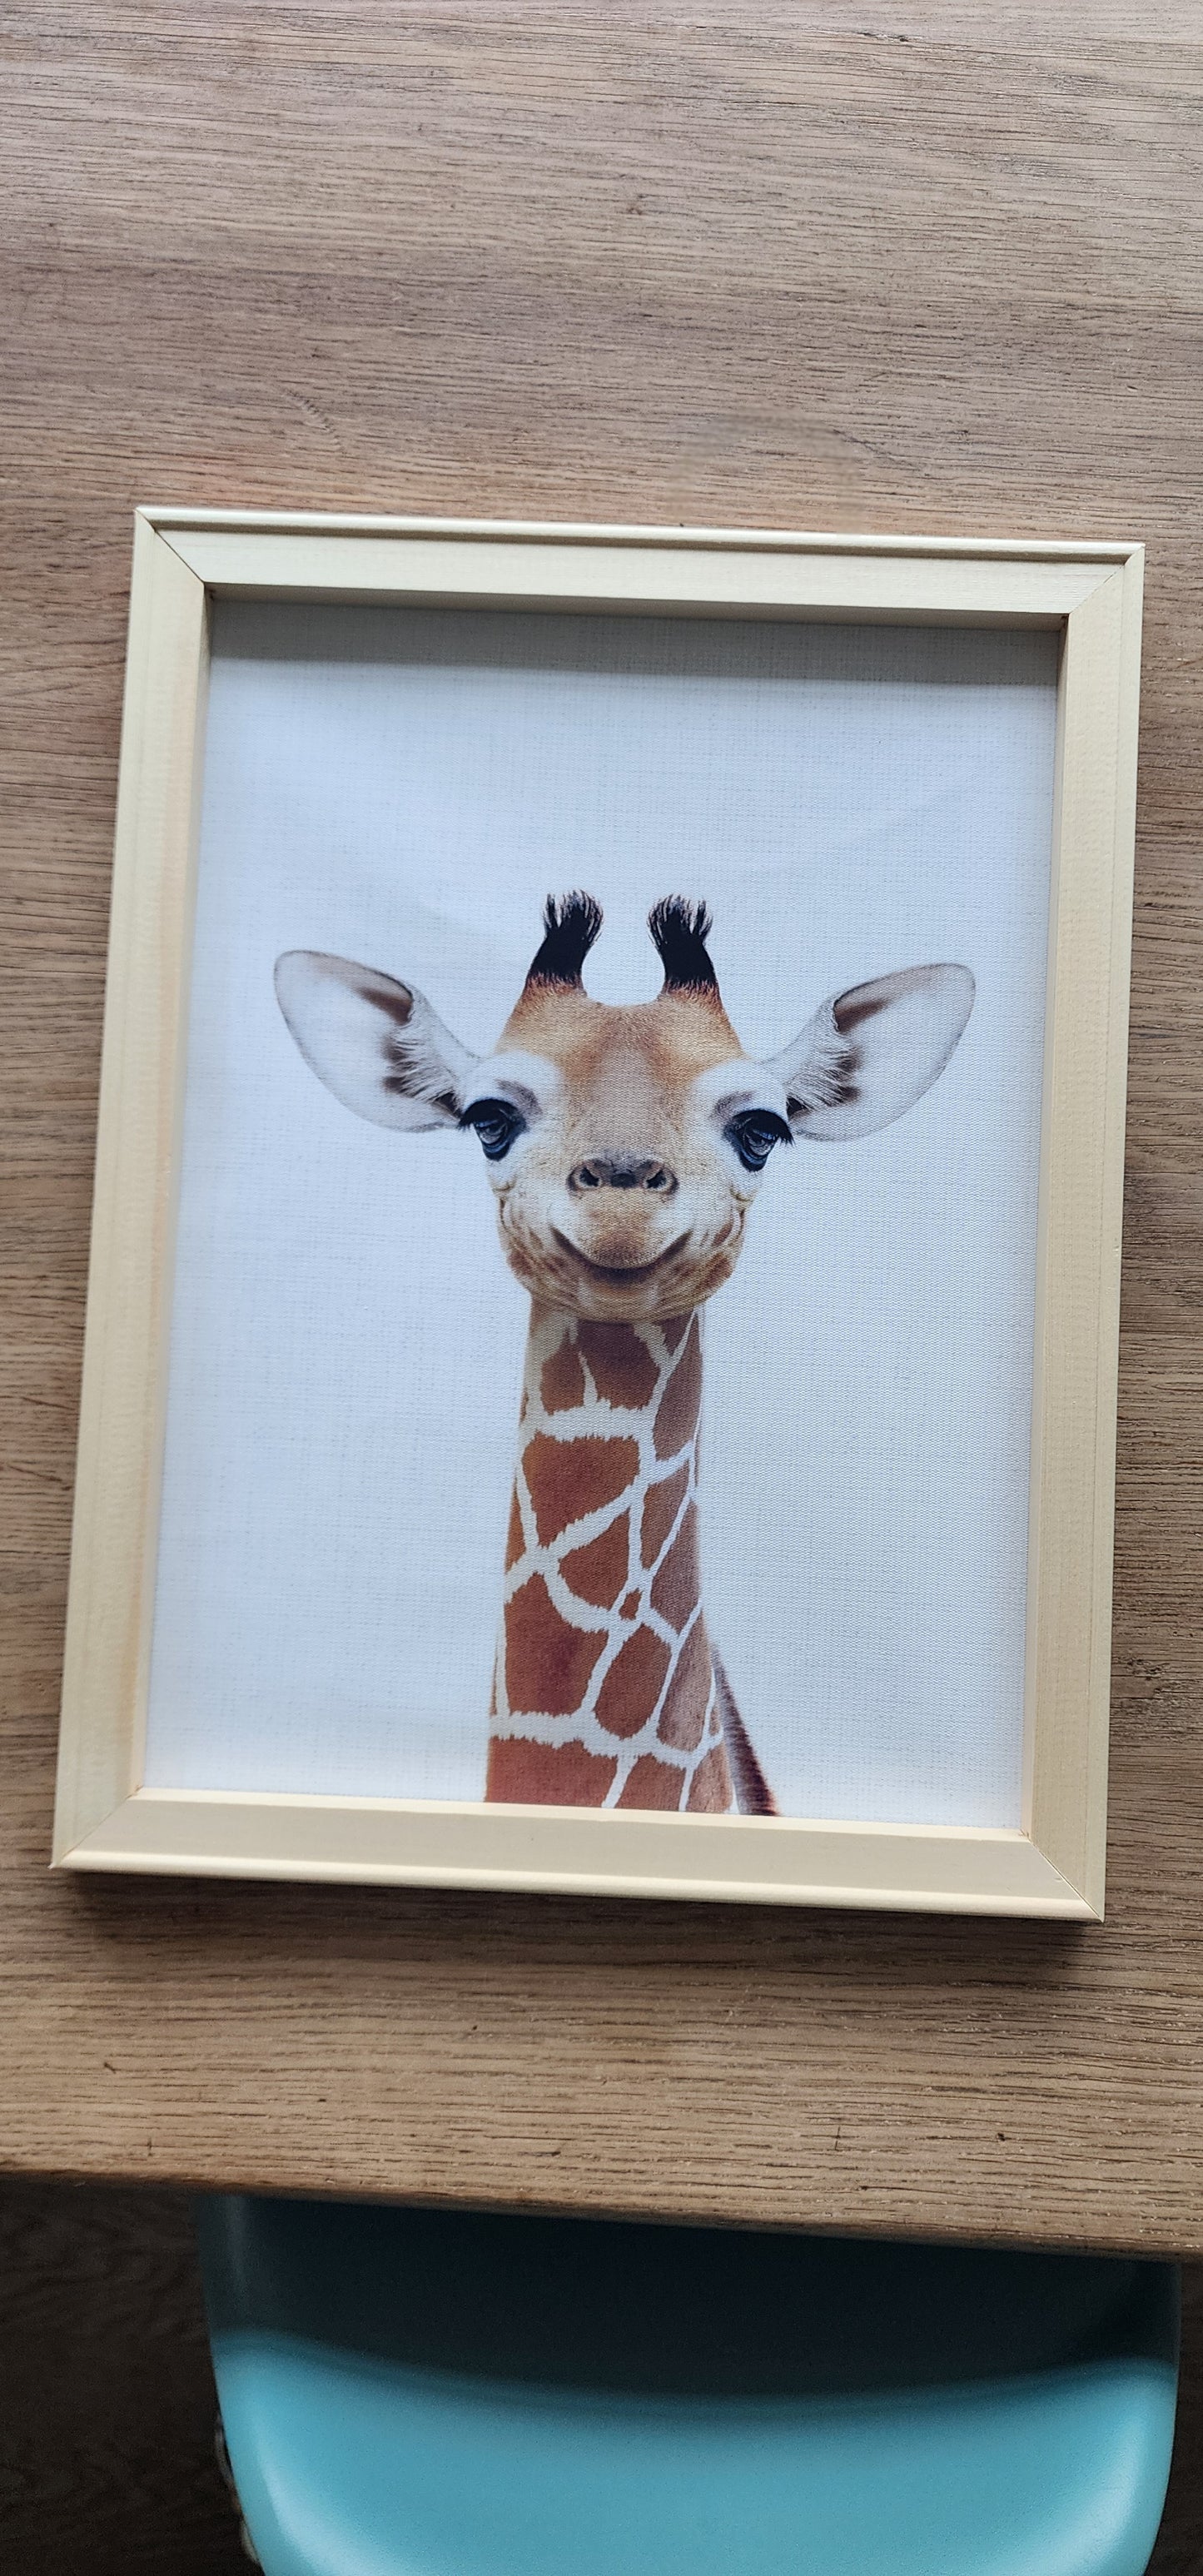 Süßer Zoo-Tier-Leinwanddruck - Giraffe